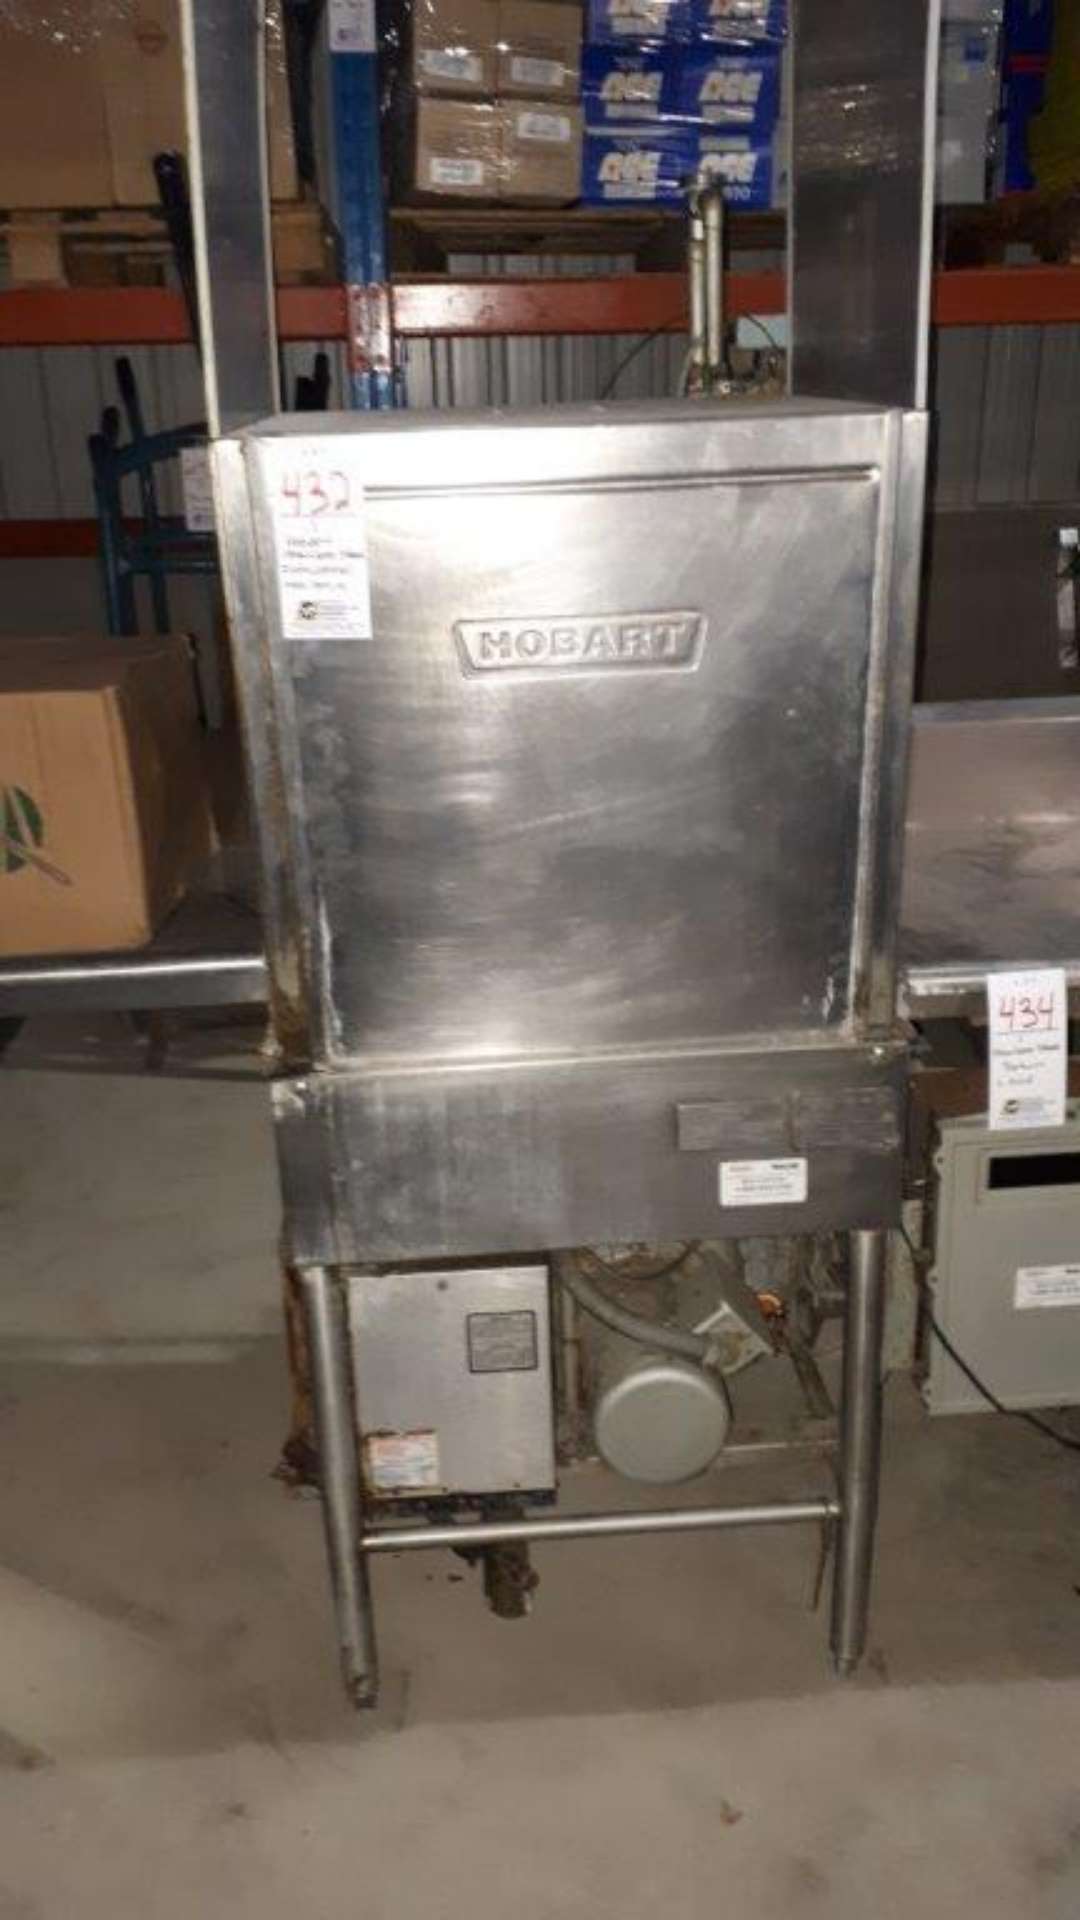 Hobart stainless steel dishwasher, model: AM14